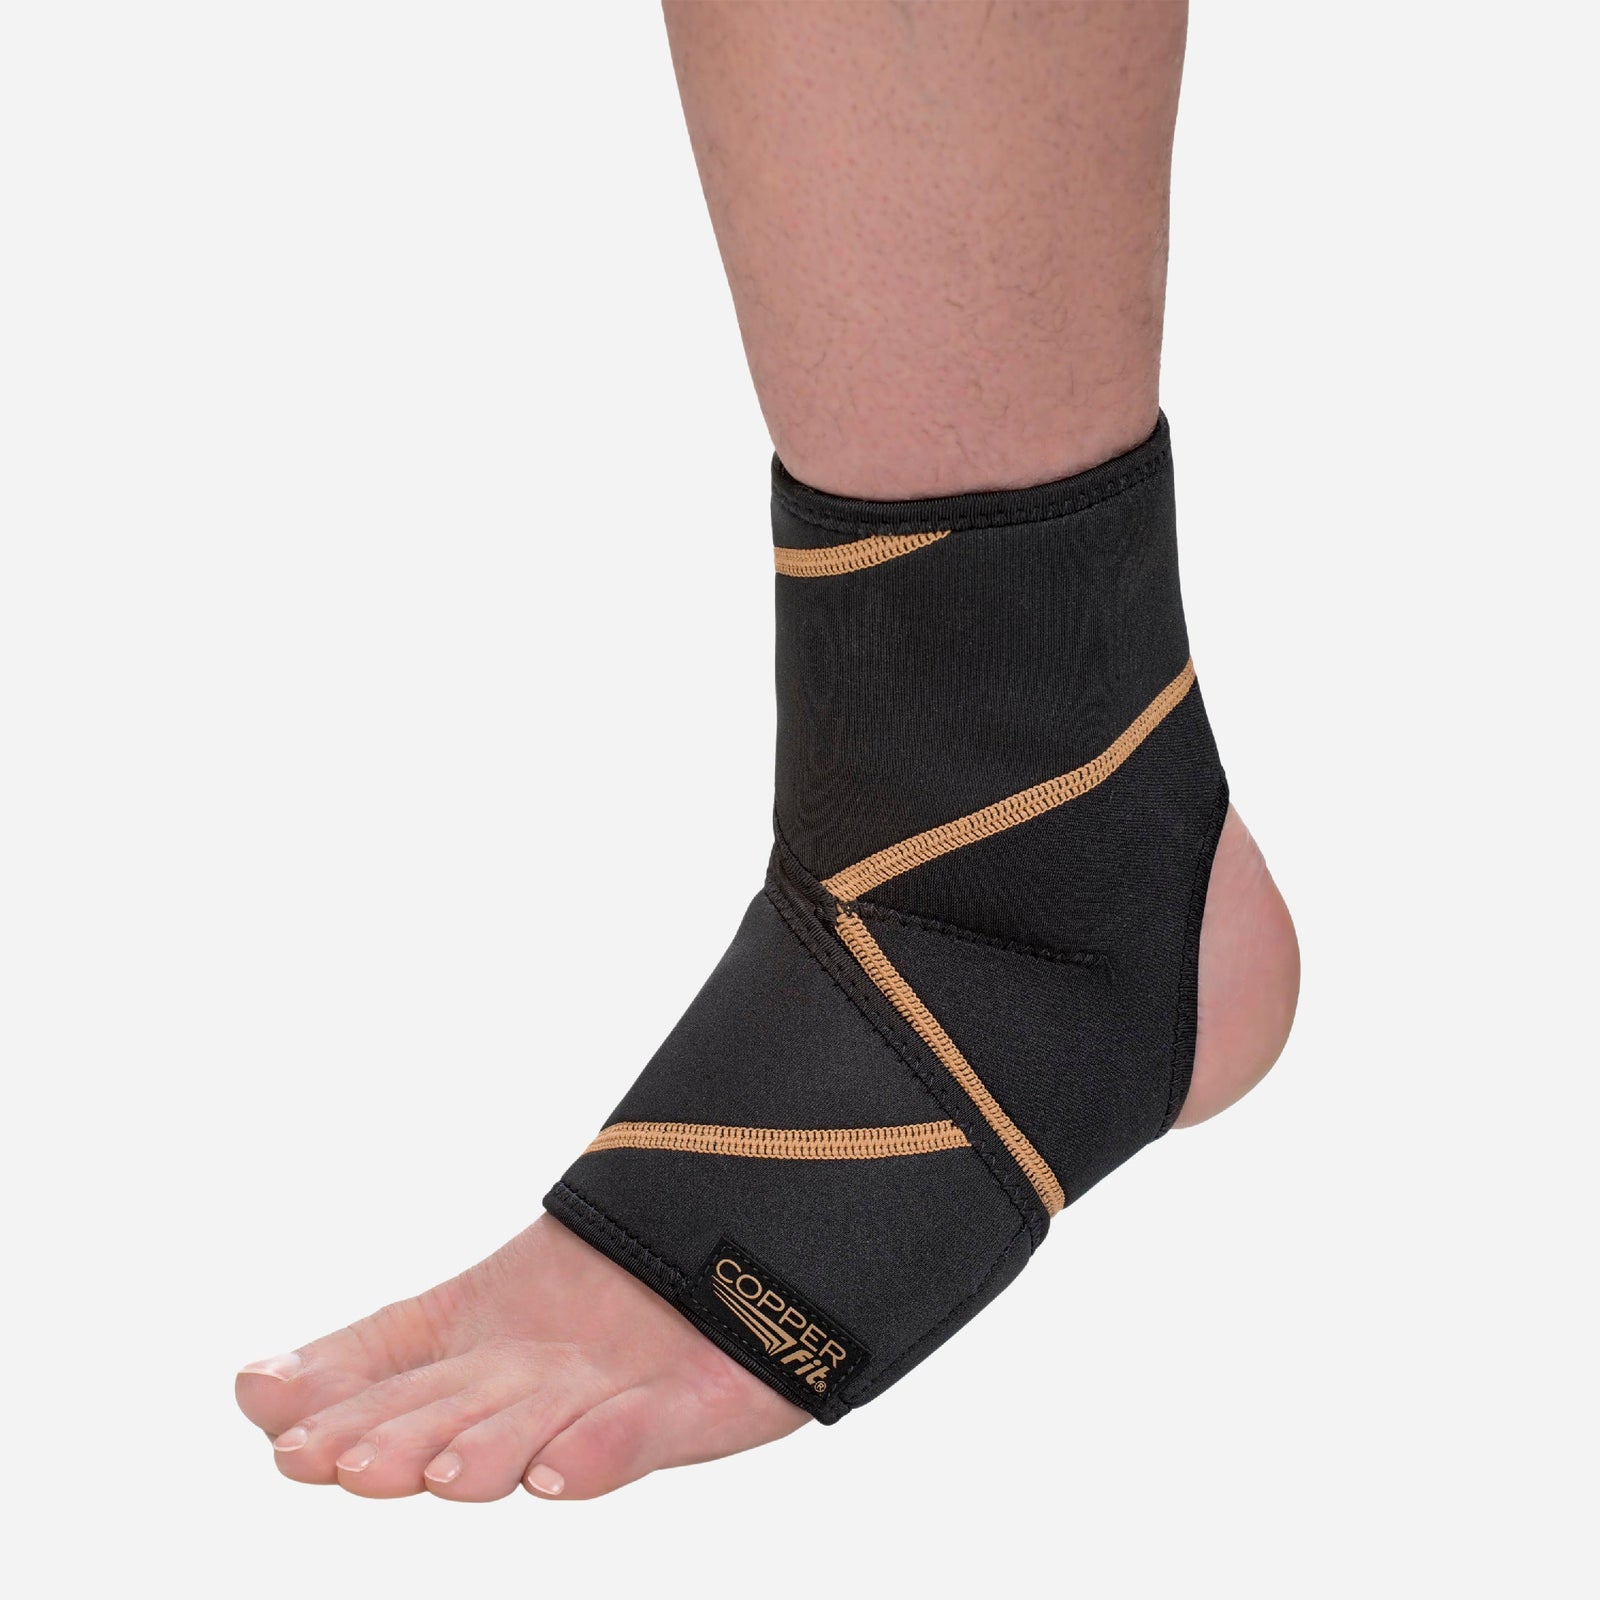 Copper Joe Ankle Brace Compression Sleeve Foot Brace, Ankle Wrap